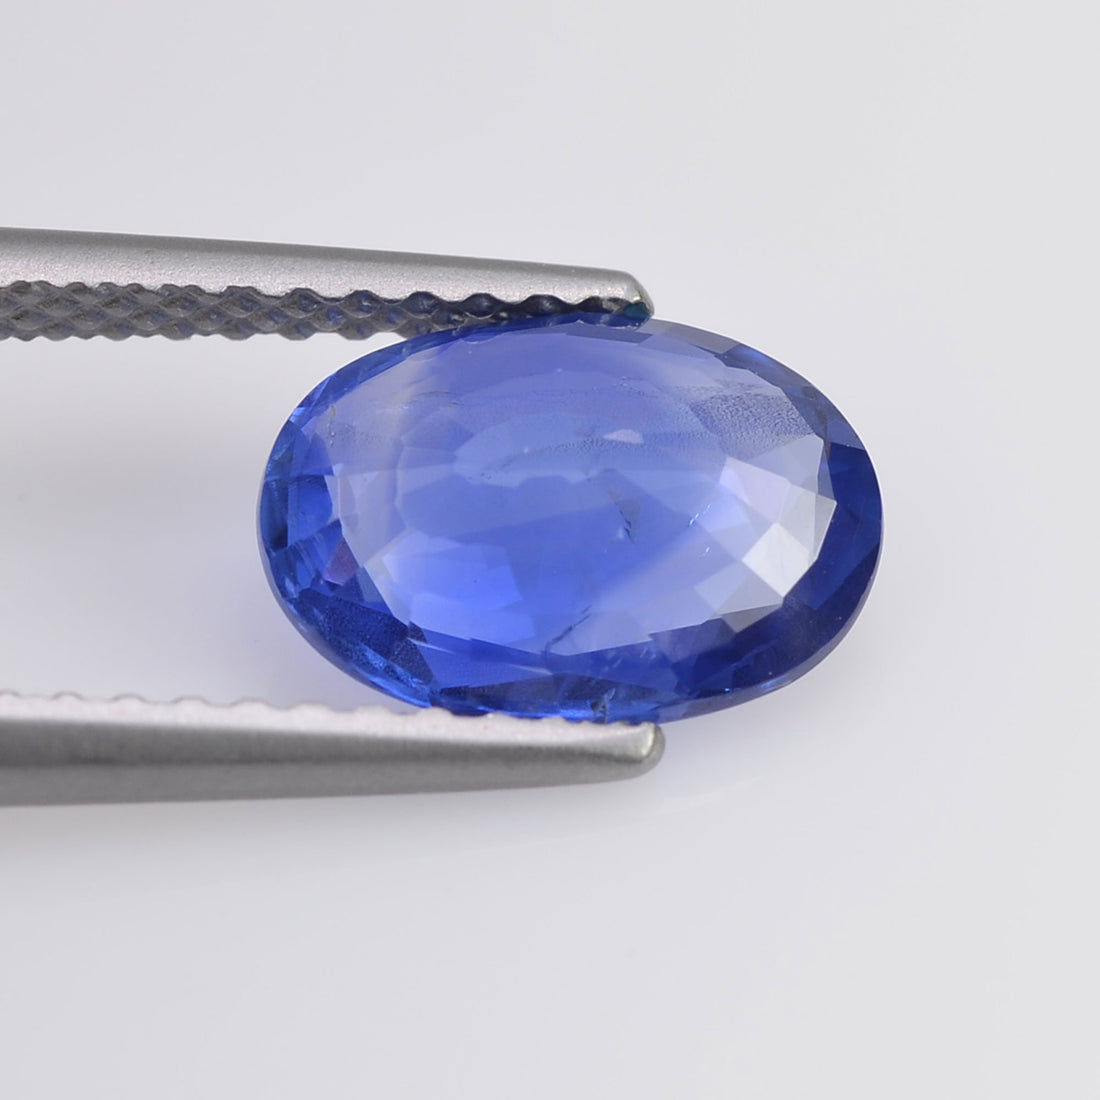 1.66 cts Unheated Natural Blue Sapphire Loose Gemstone Oval Cut - Thai Gems Export Ltd.